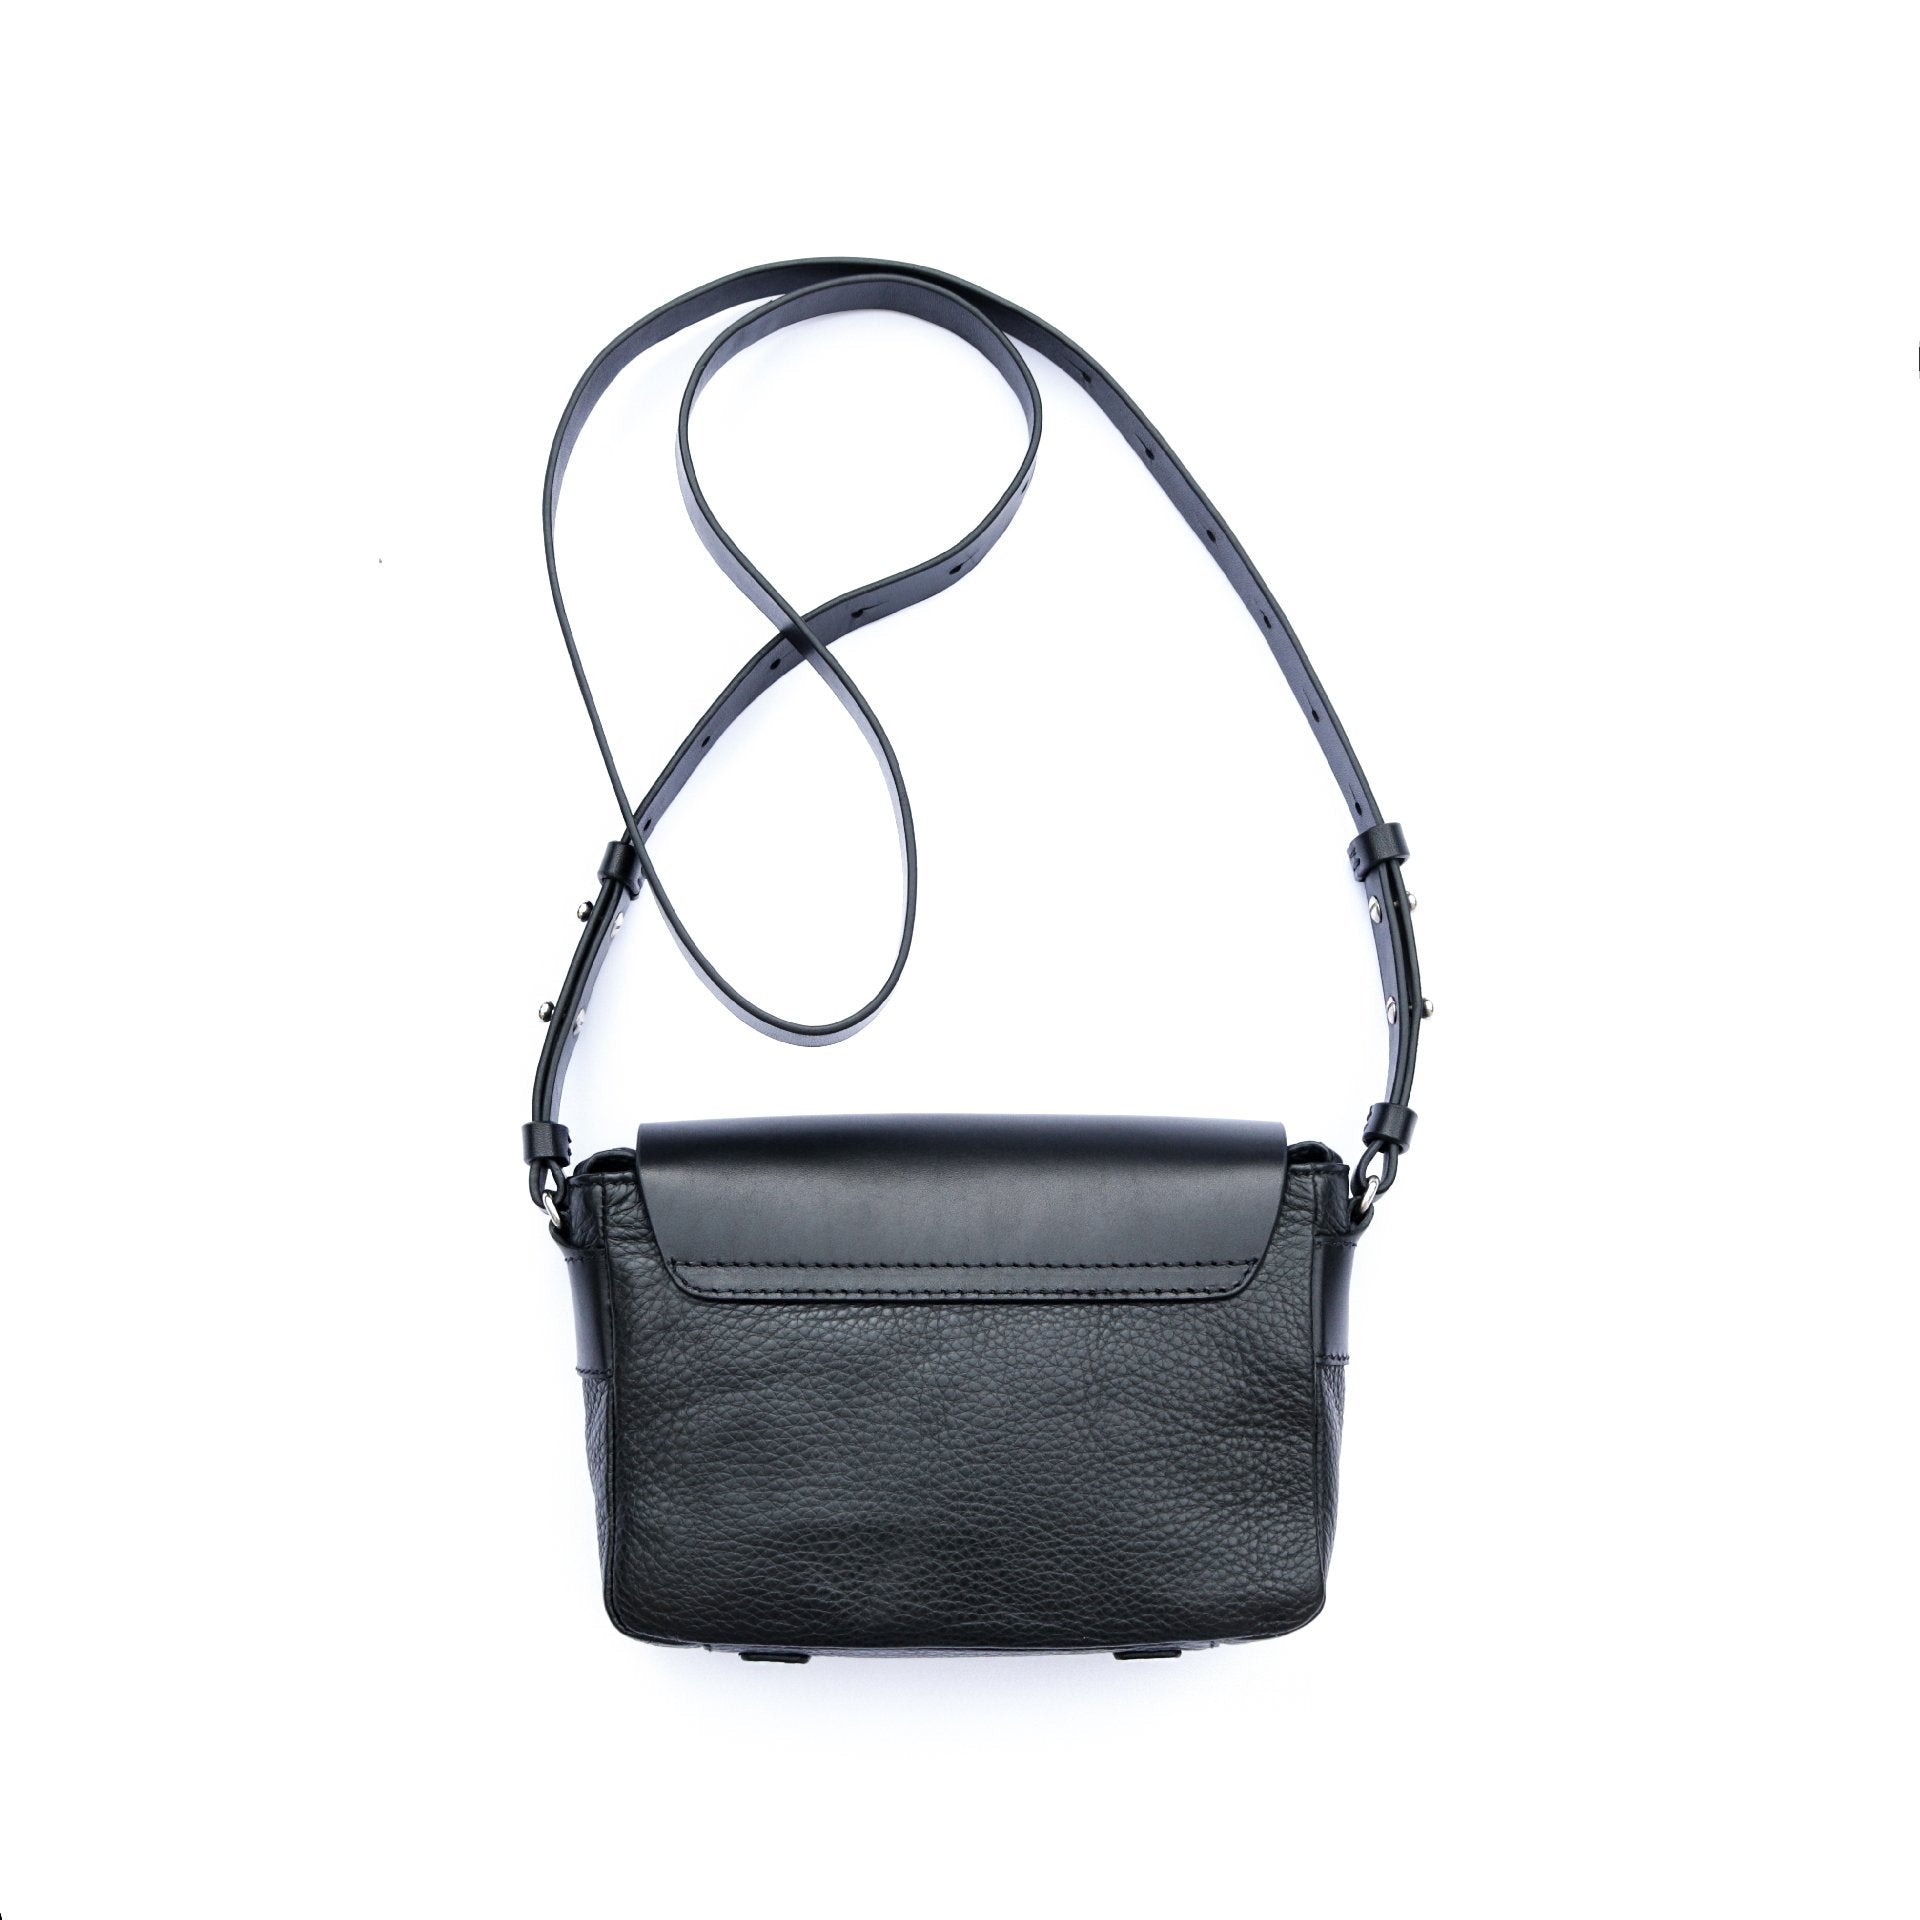 Whitney Bag / Black leather 